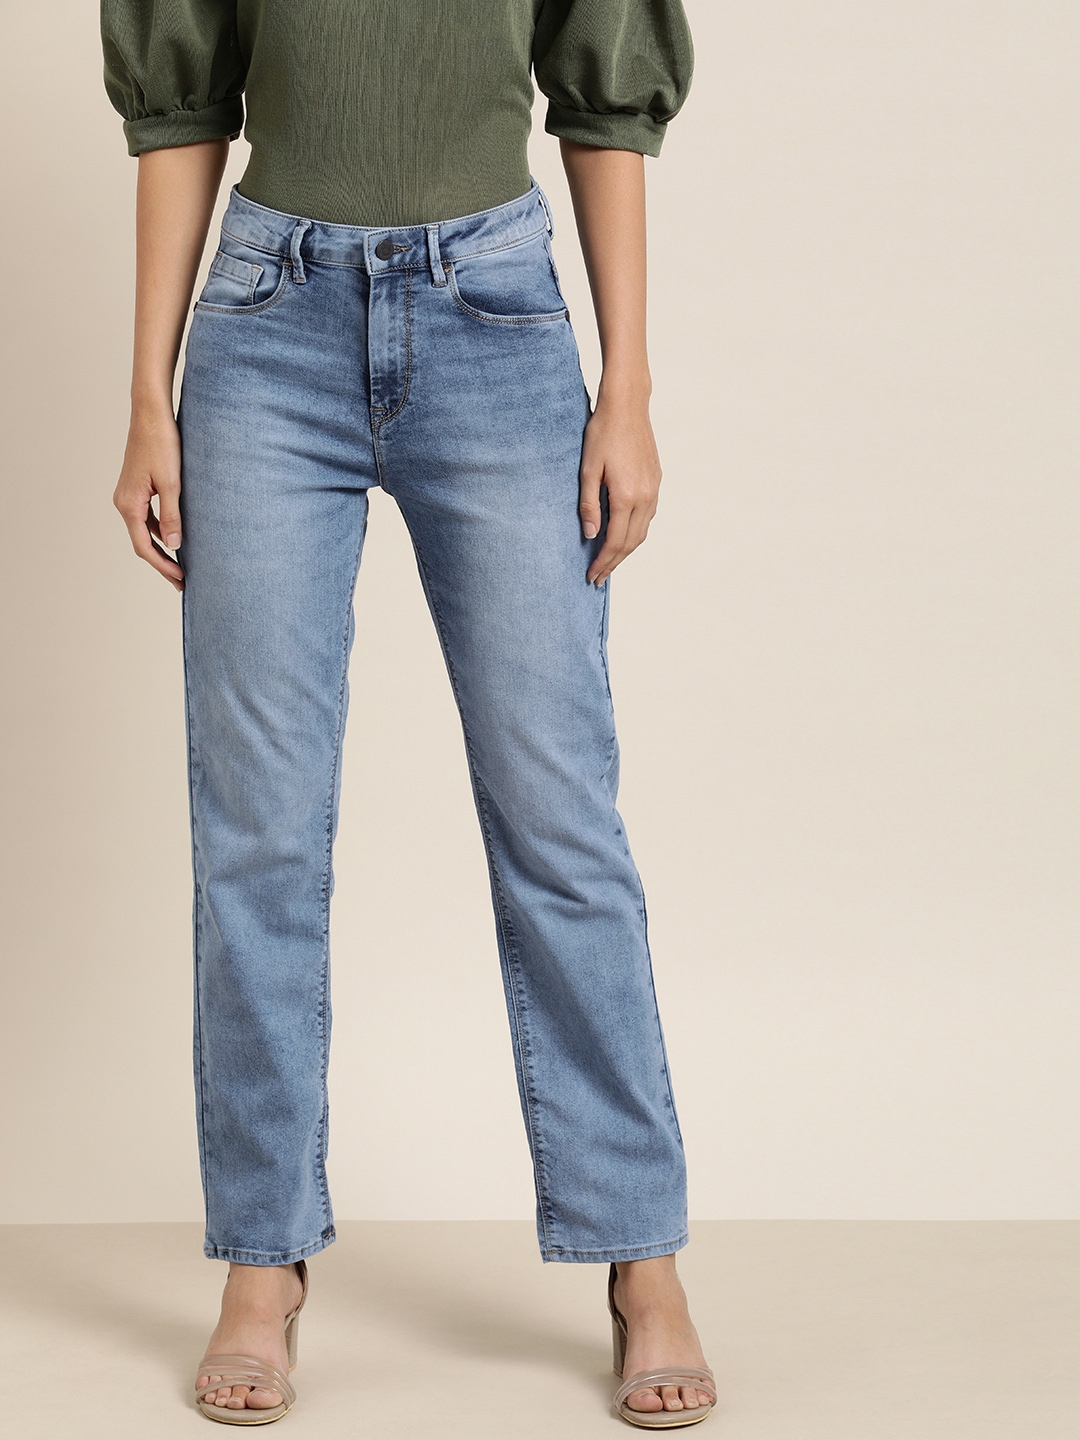 Best High-Rise Jeans for Women That Flatter All Body Types - 2024-saigonsouth.com.vn